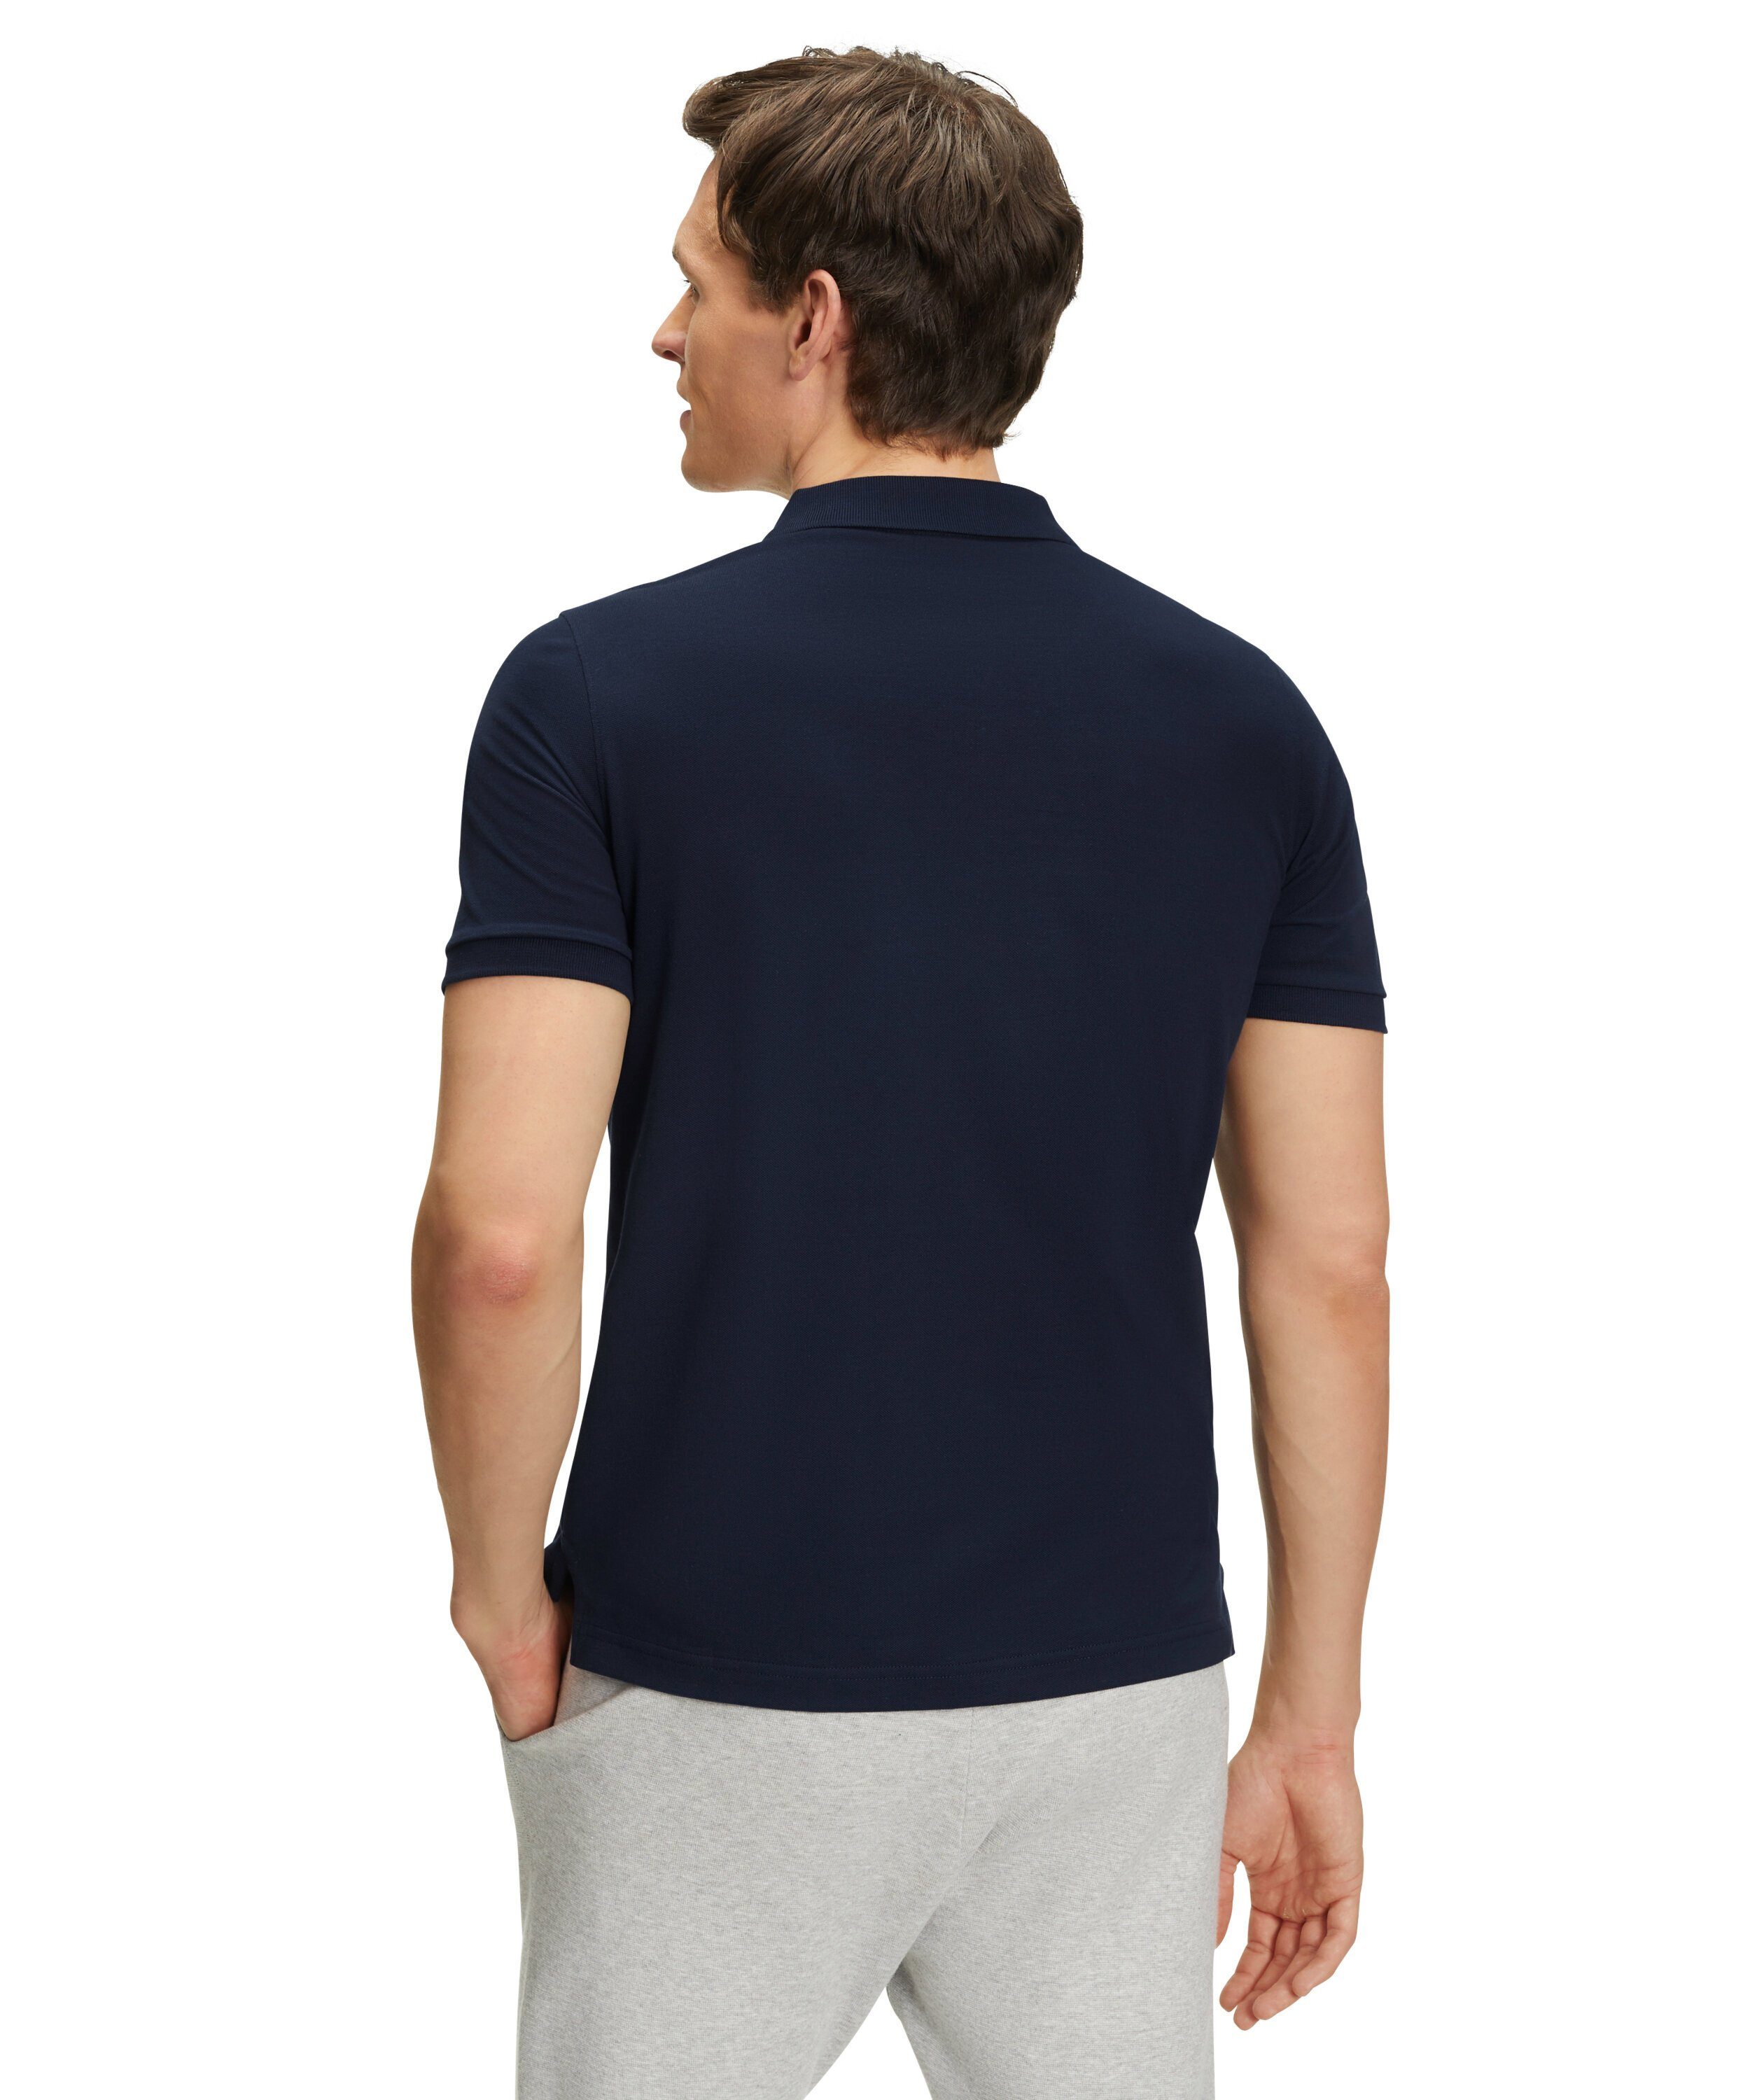 Poloshirt blue Pima-Baumwolle (6116) space hochwertiger aus FALKE